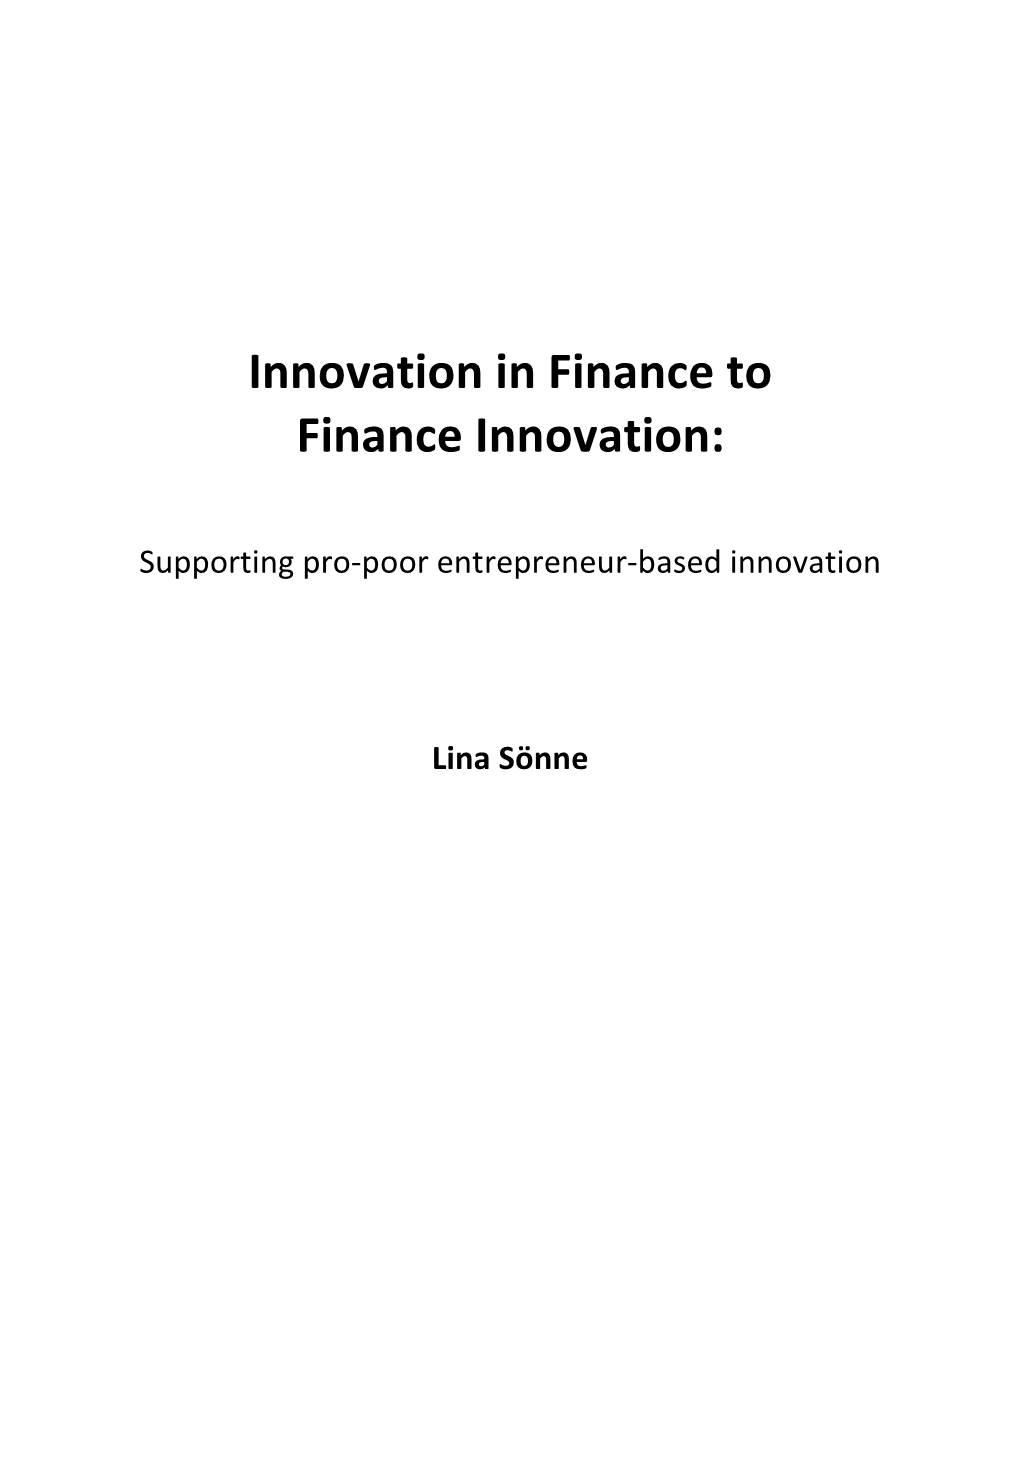 Innovation in Finance to Finance Innovation